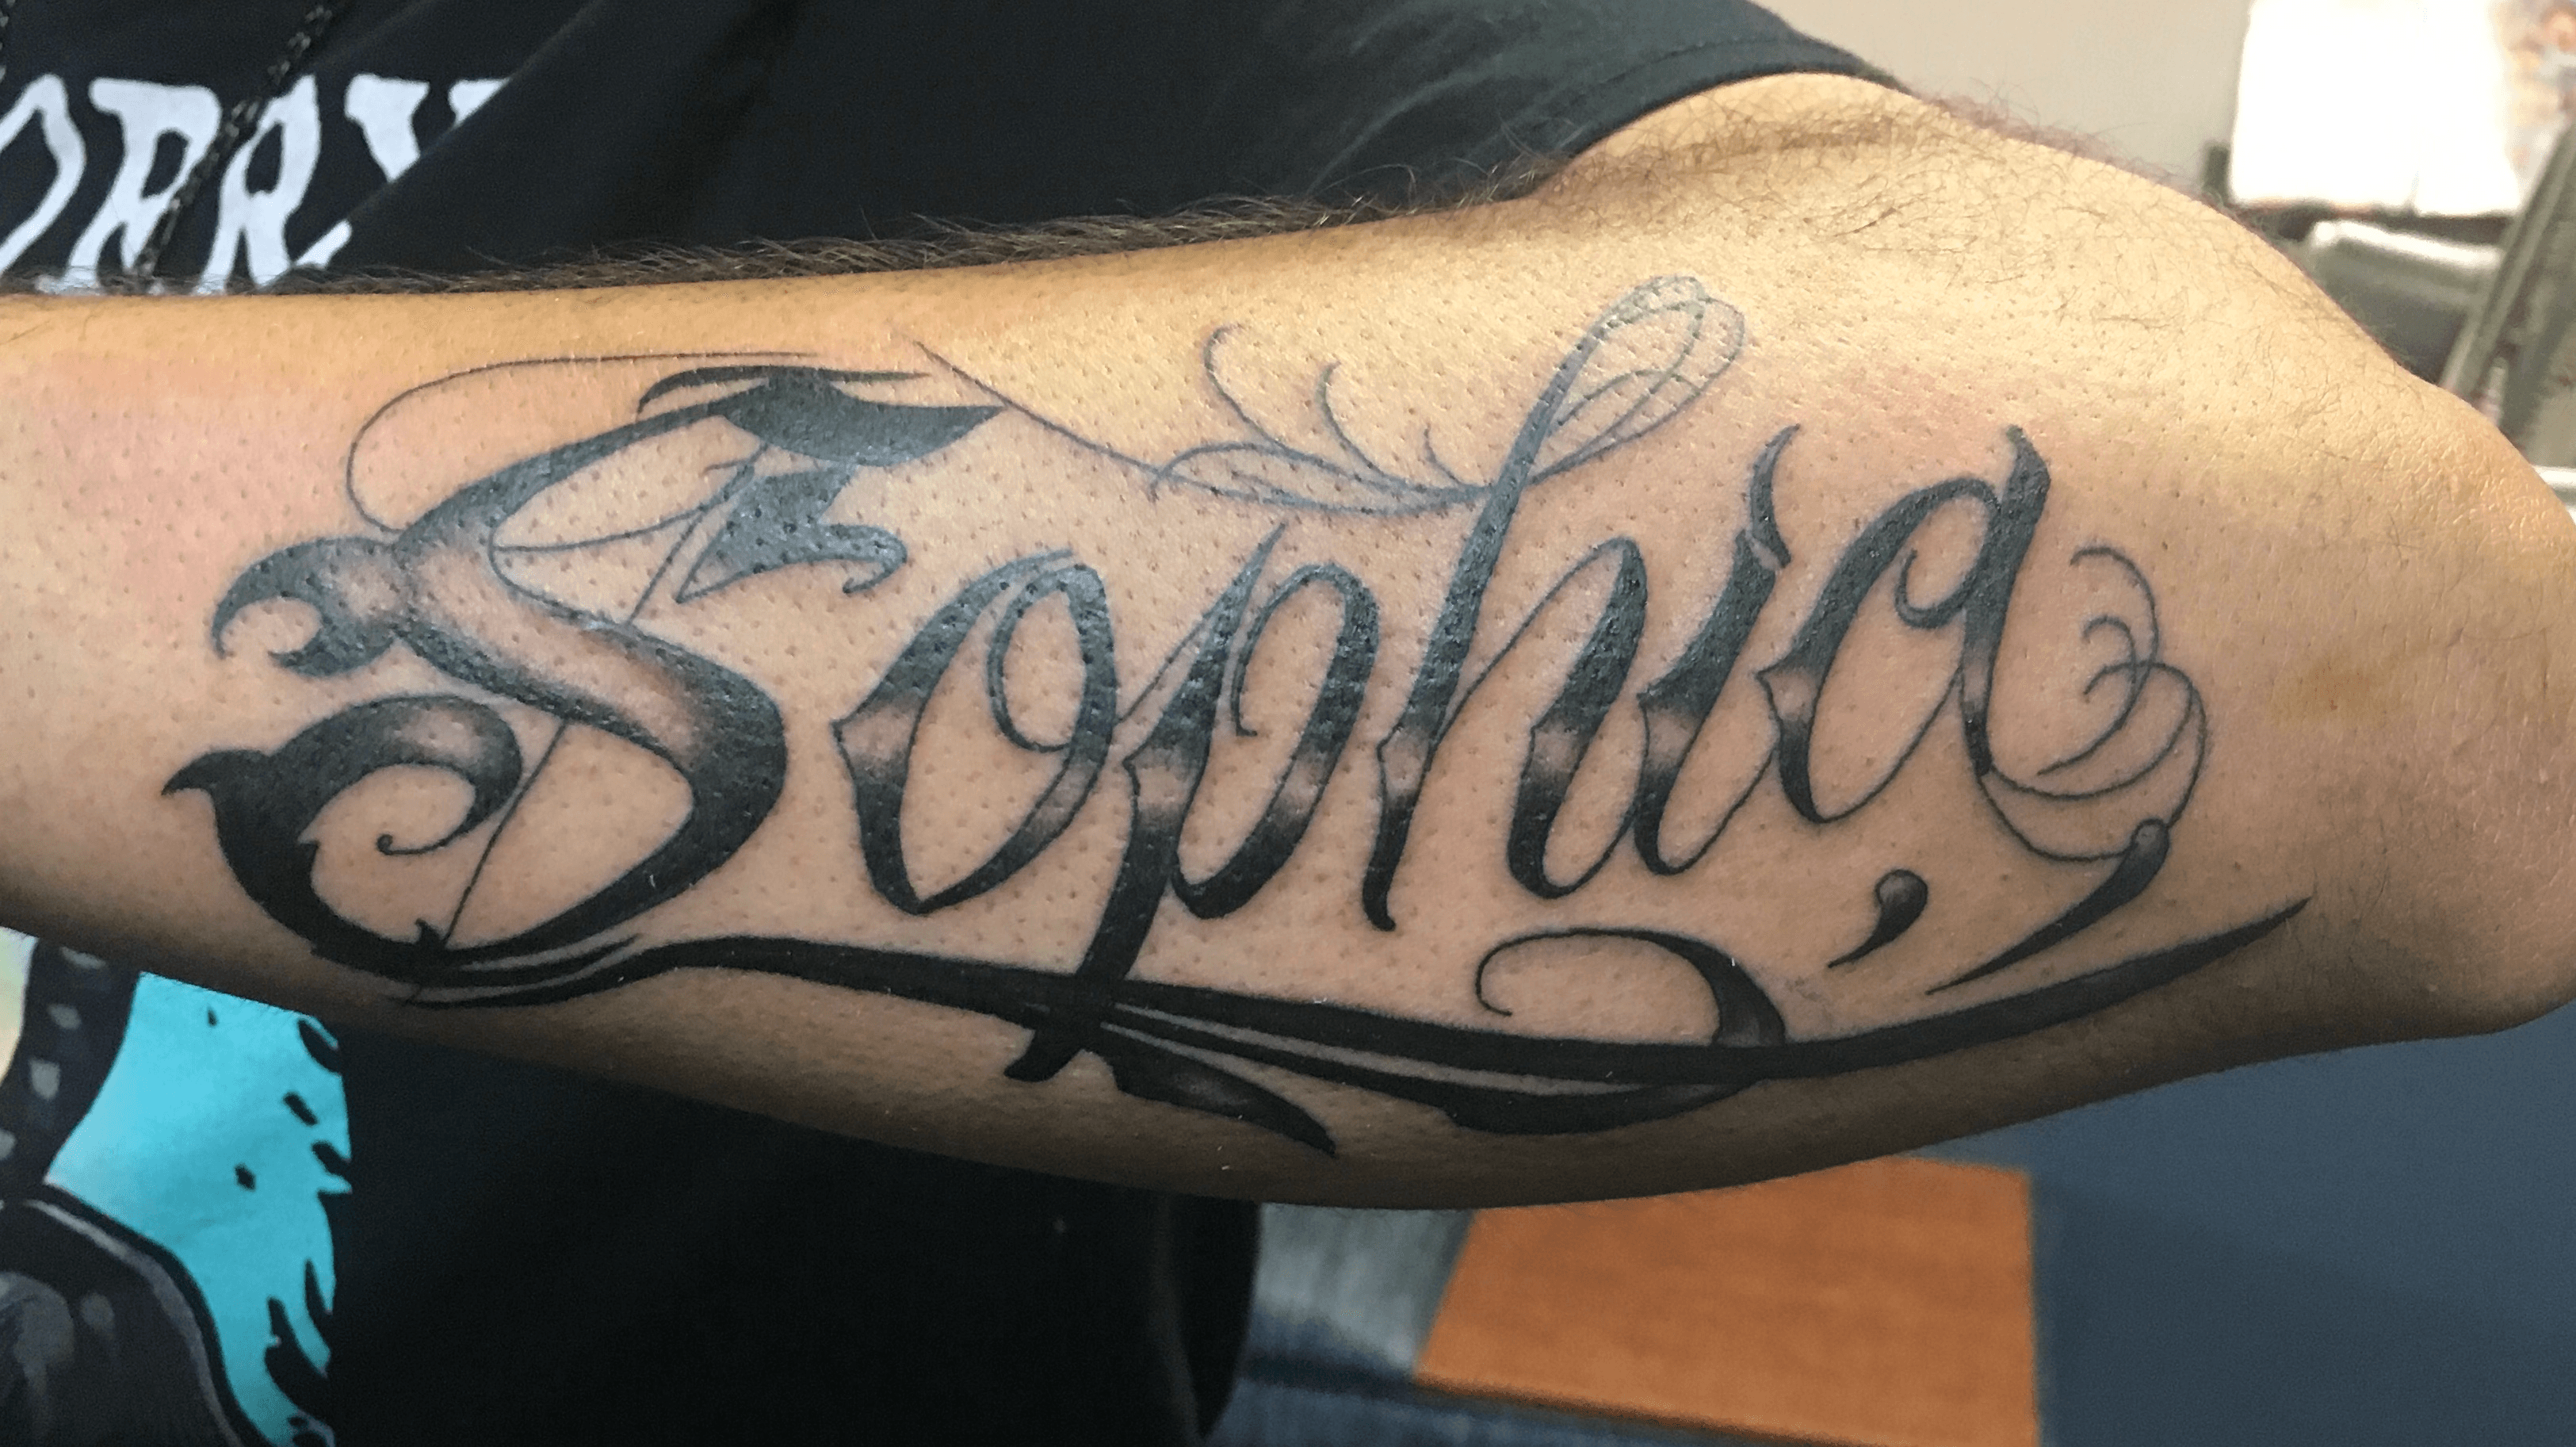 Sophia Name Tattoo Designs